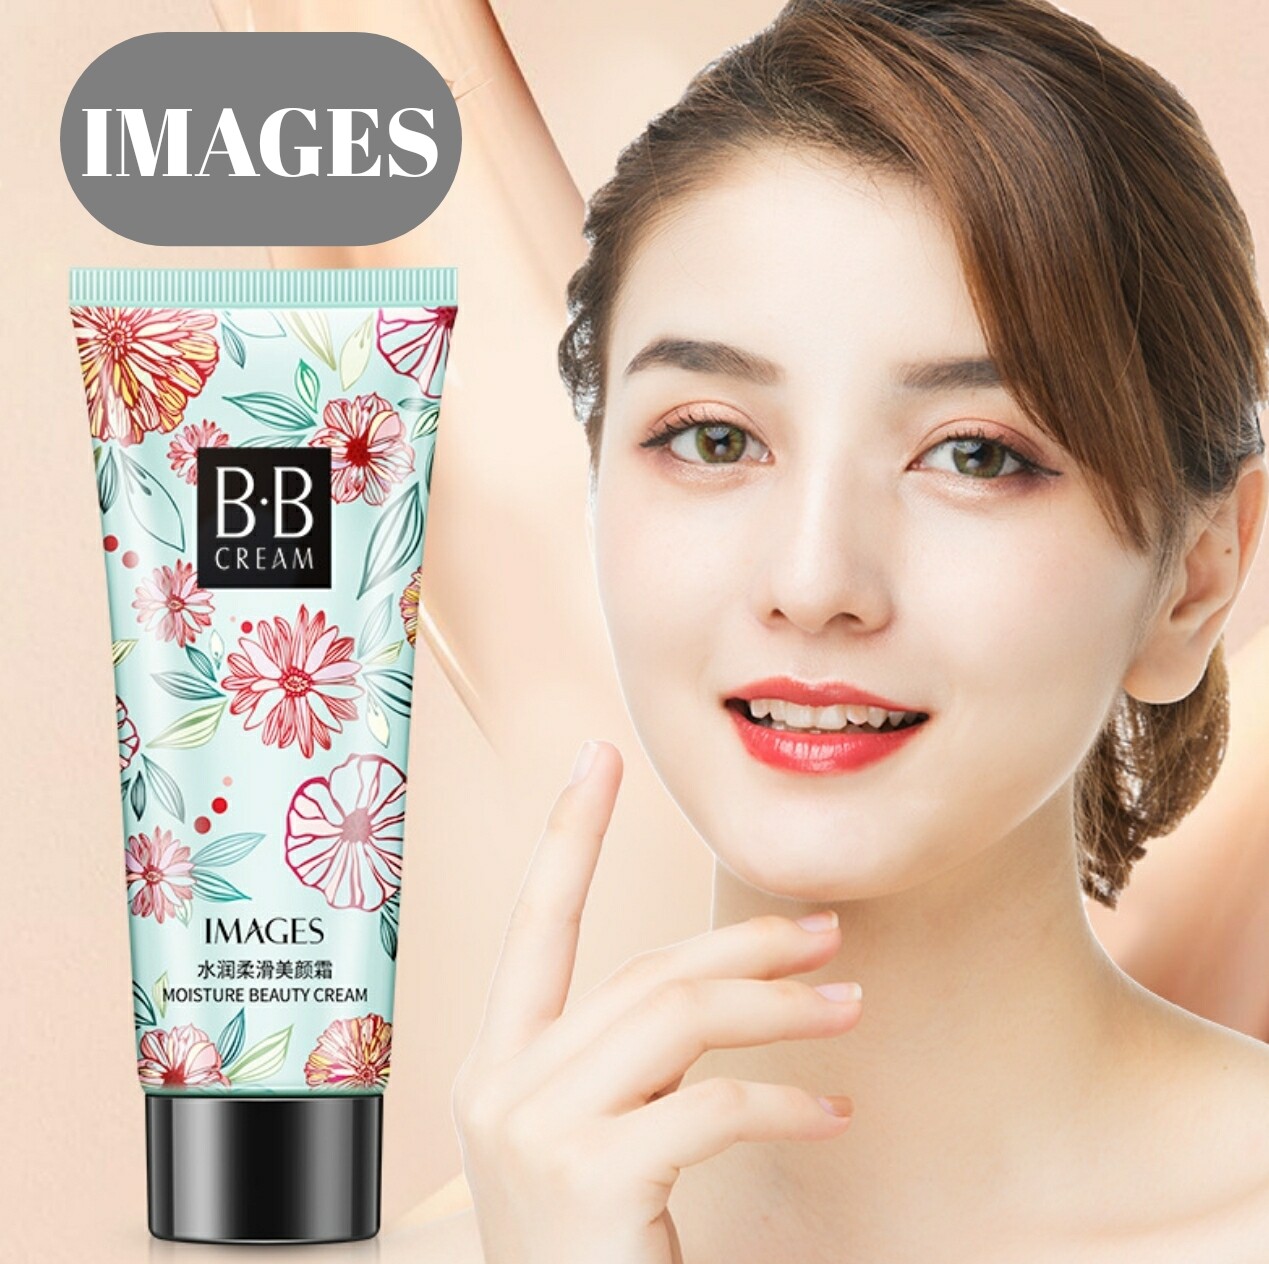 BB Images บีบีครีมทาหน้าเนื้อบางเบา ปกปิด คุมมัน กันน้ำ หน้าเนียนใส Images BB Cream 30g มีของในไทยพร้อมส่ง